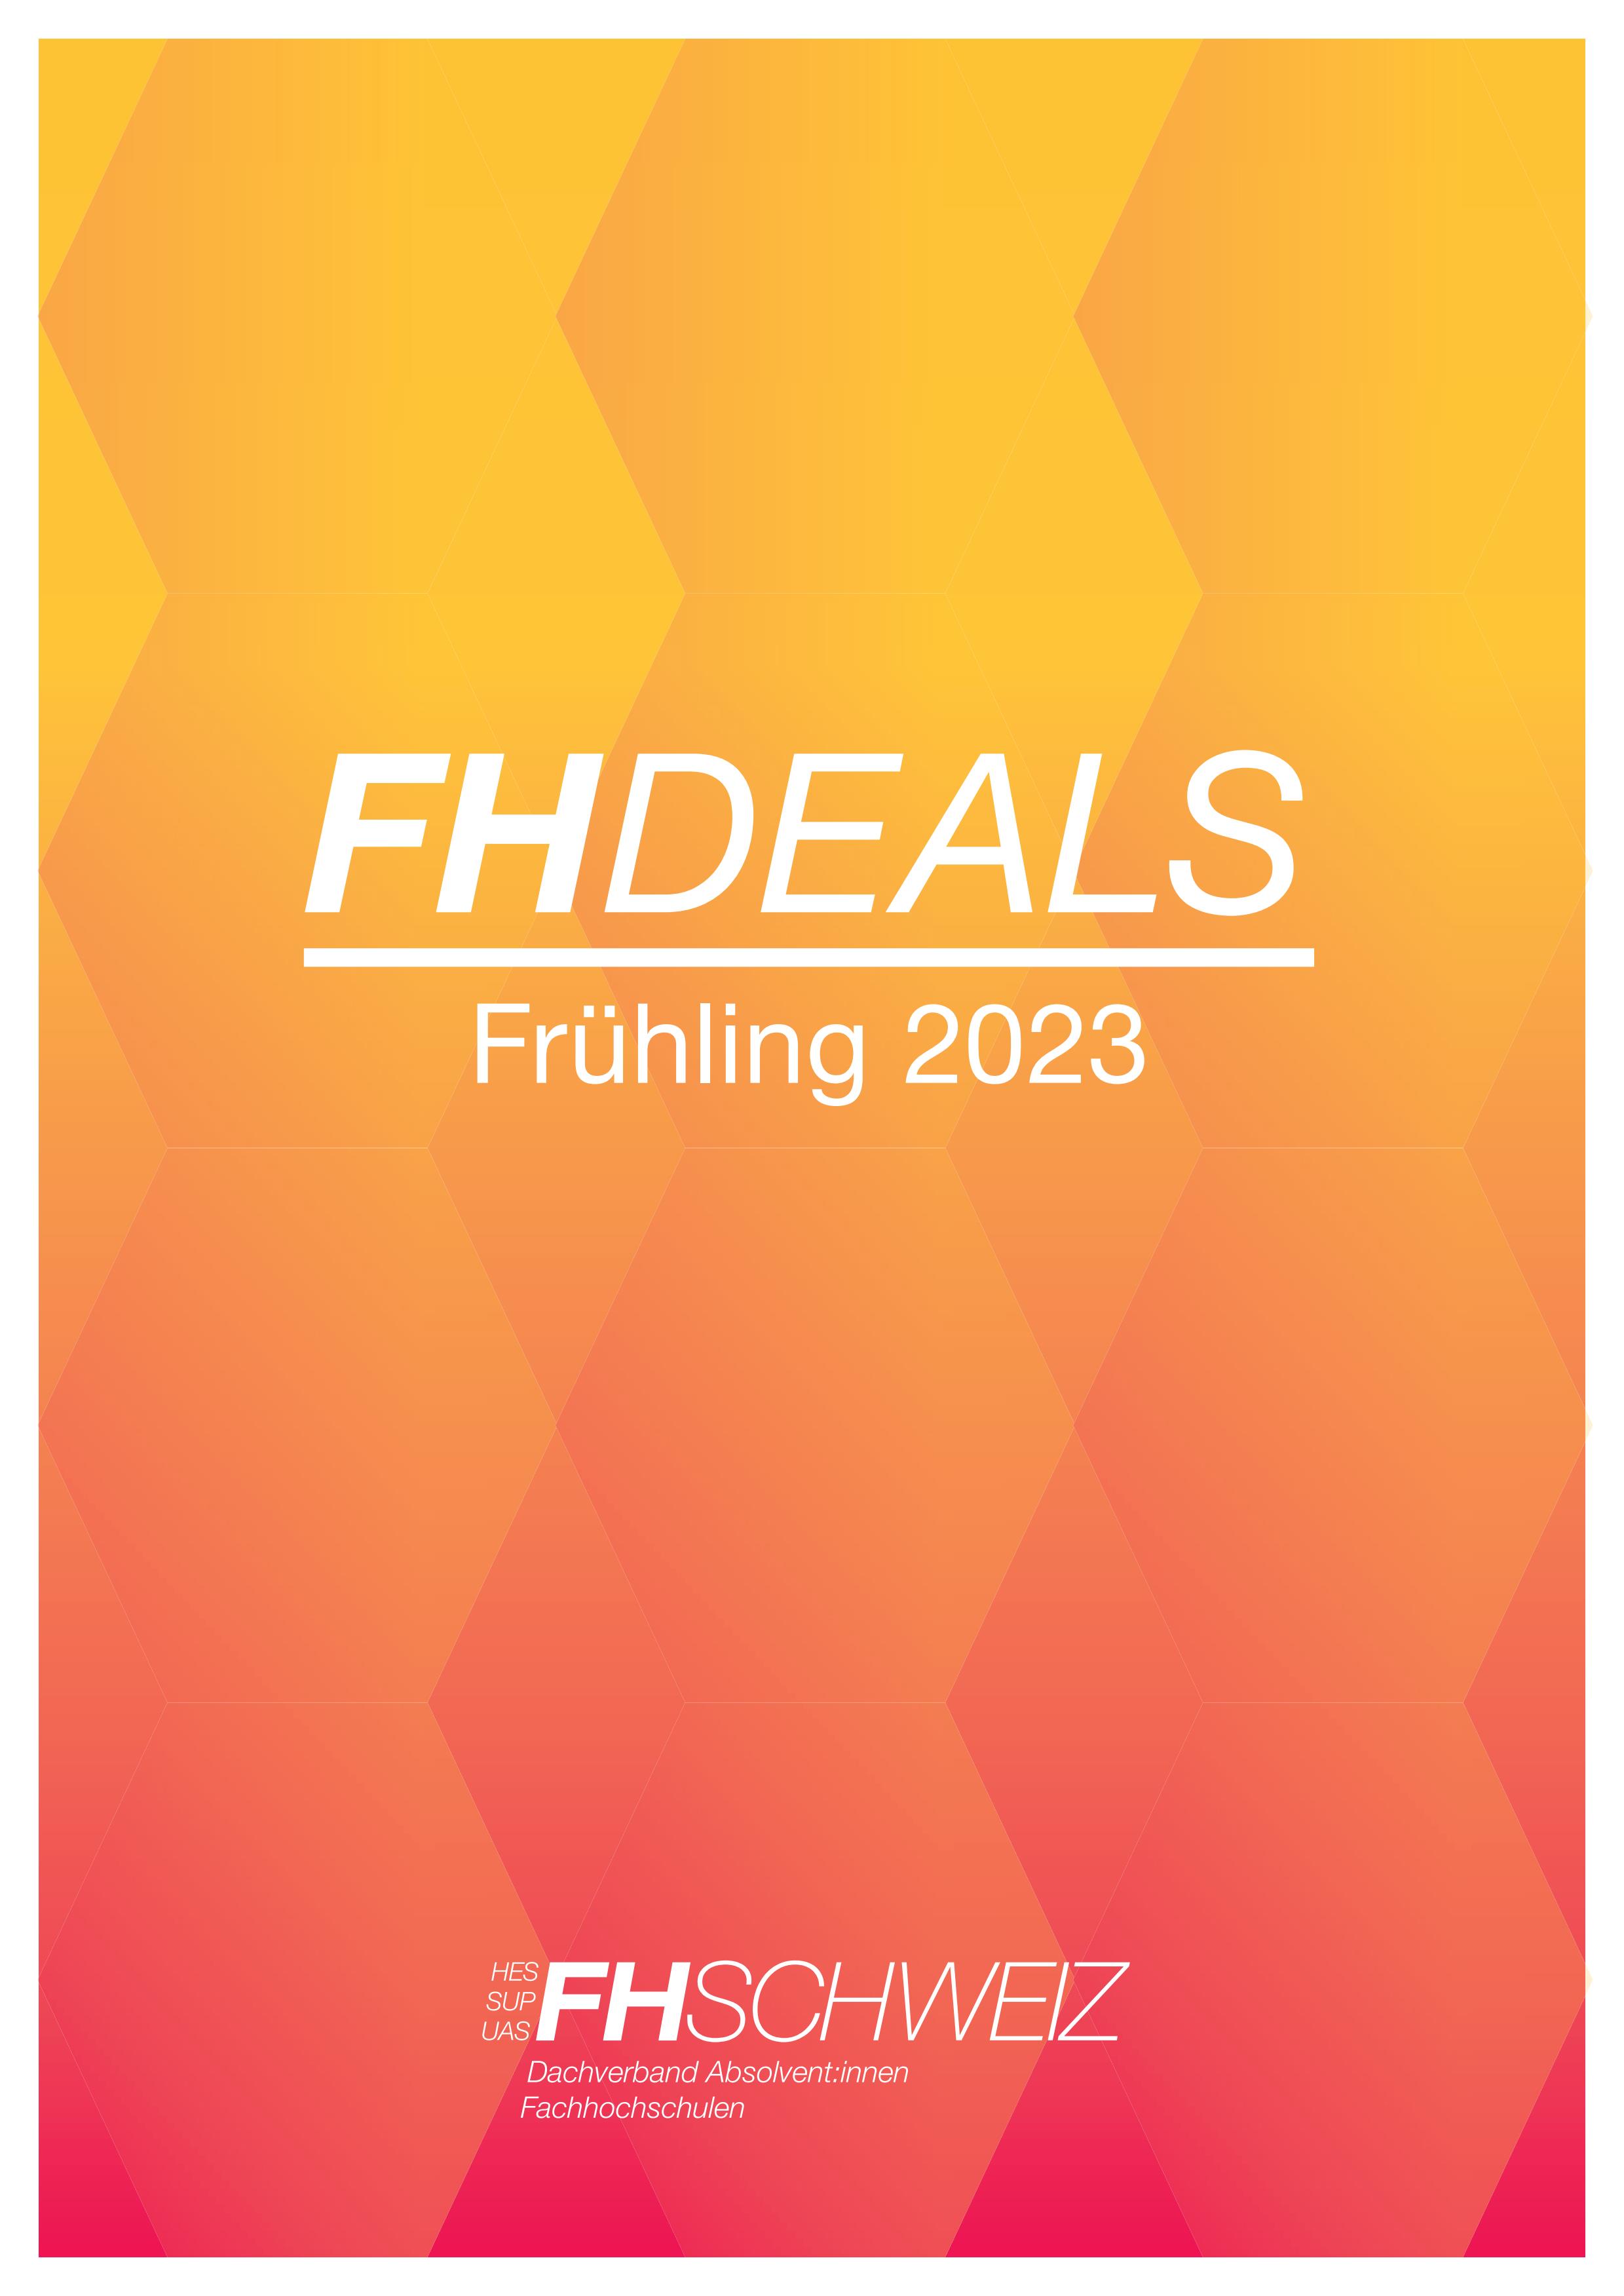 FH-DEALS Frühling 2023